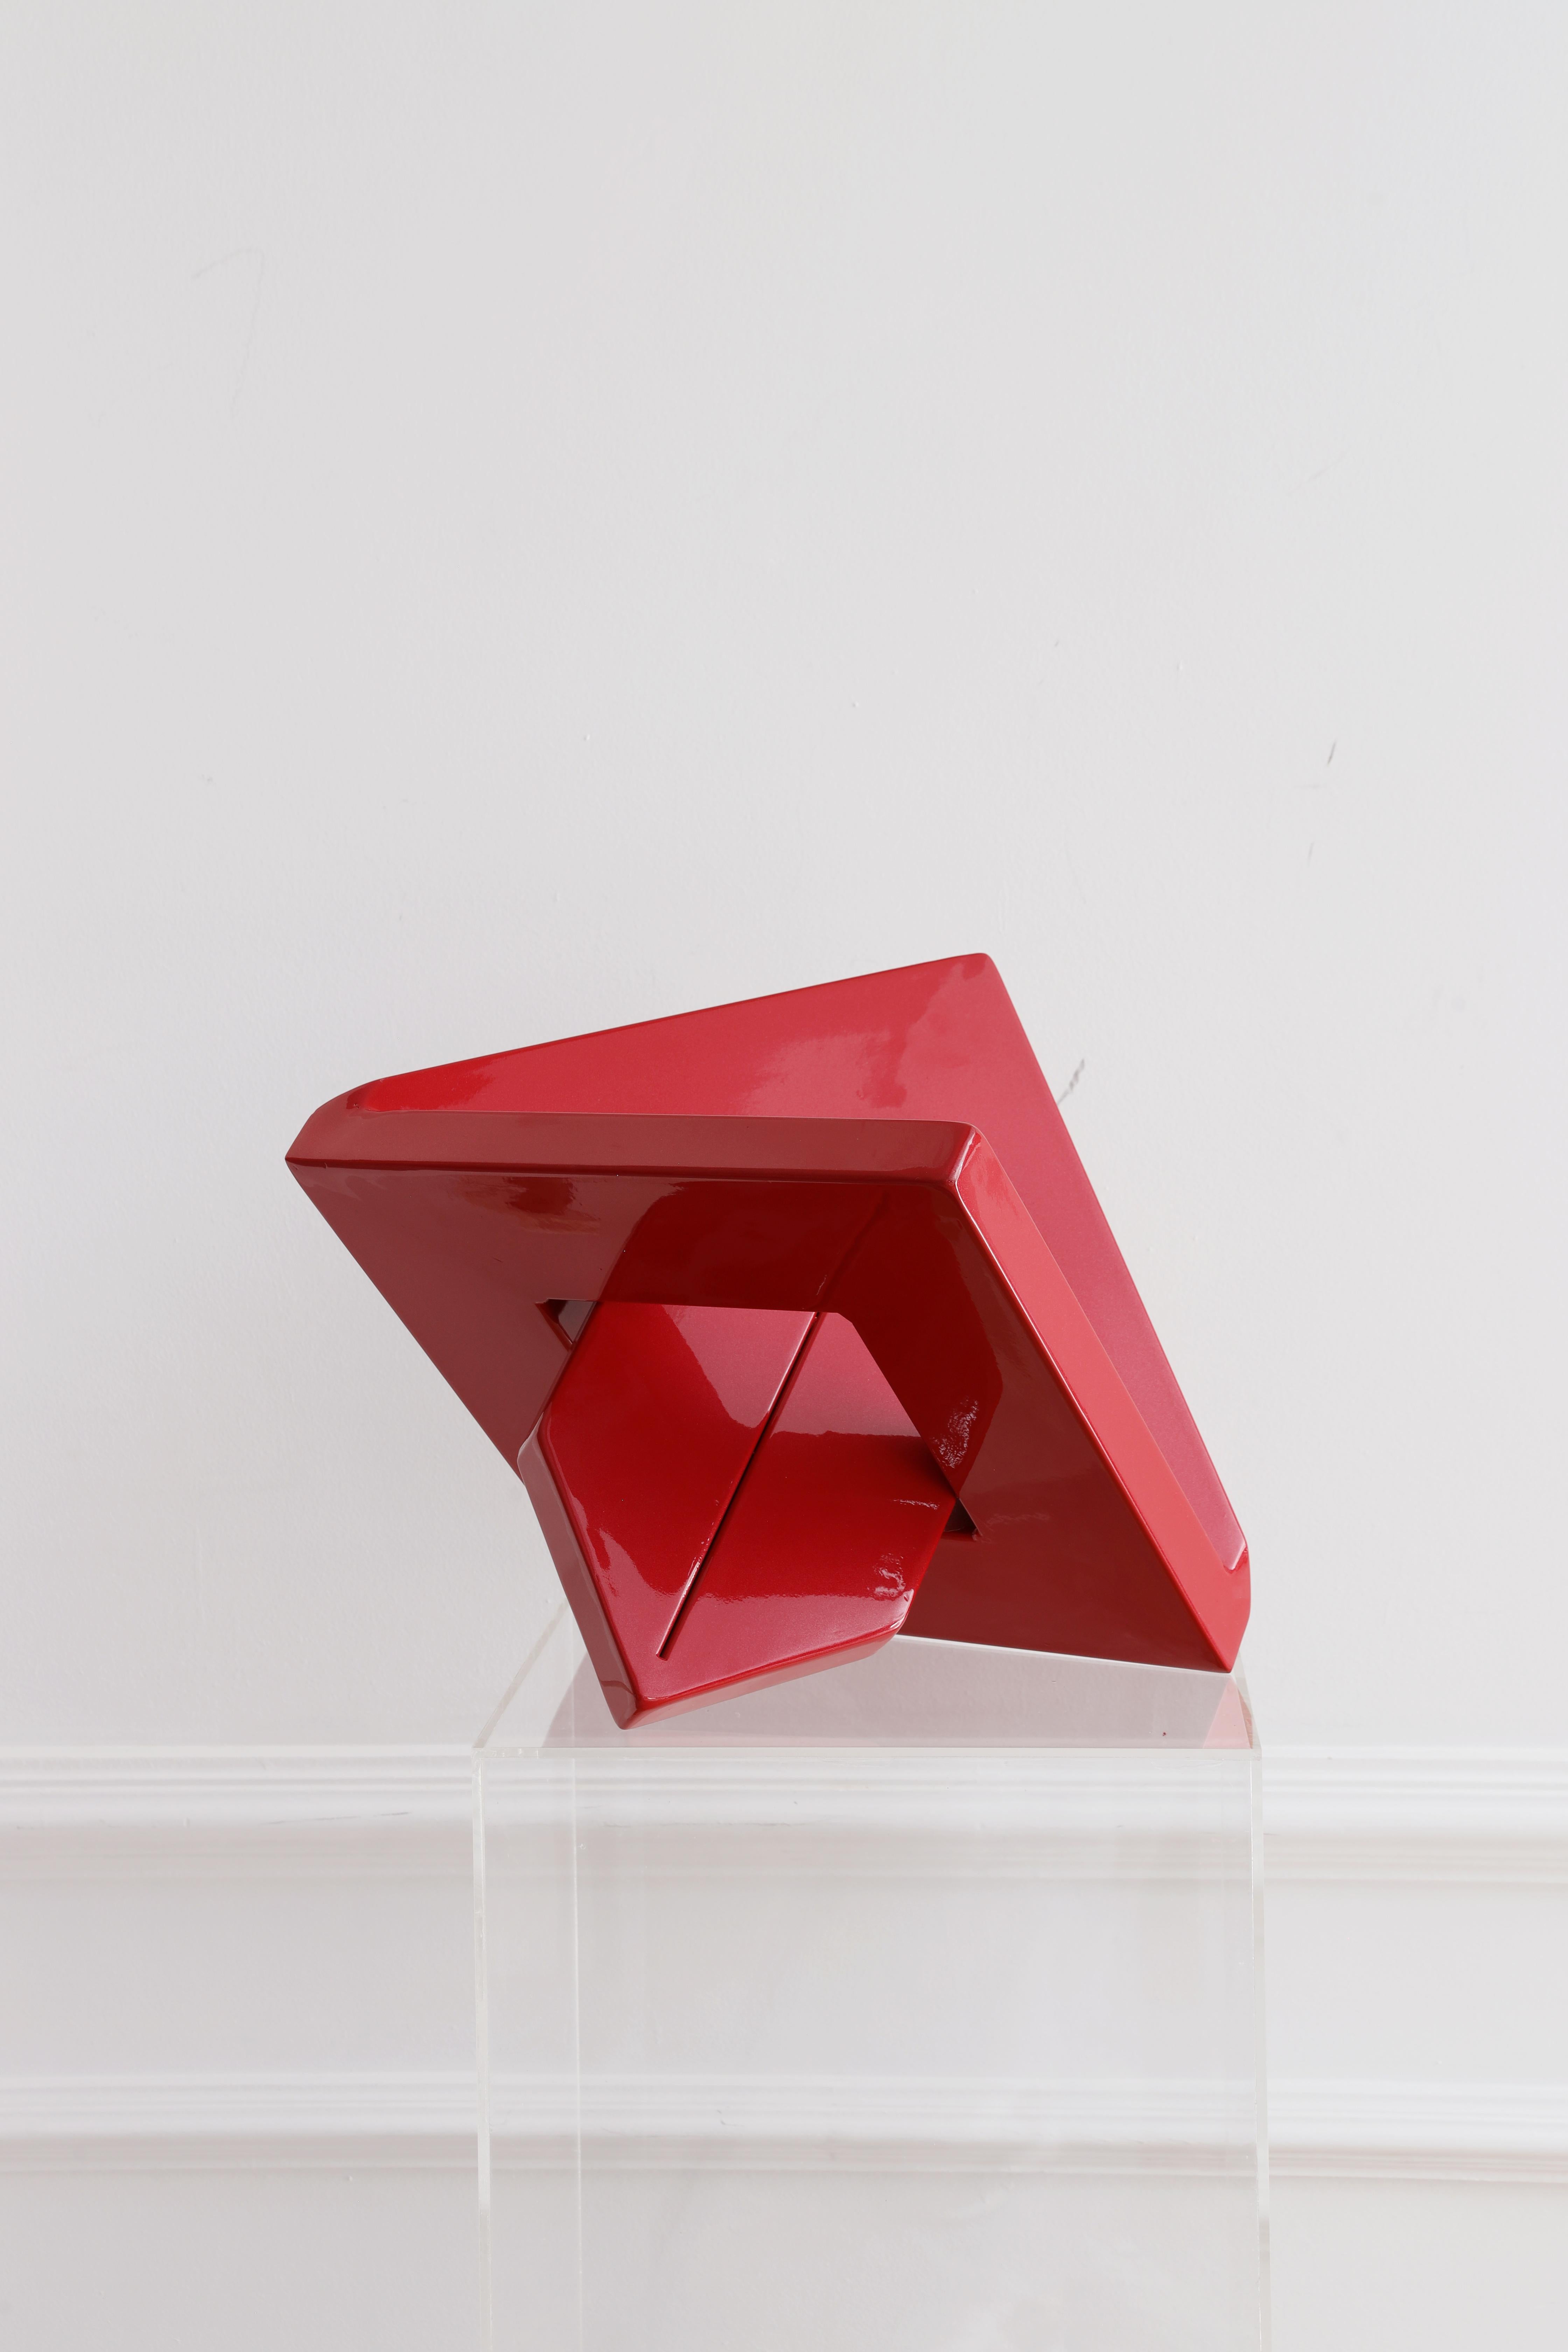 The arrow Small Decoration Red Metal Sculpture Maite Carranza